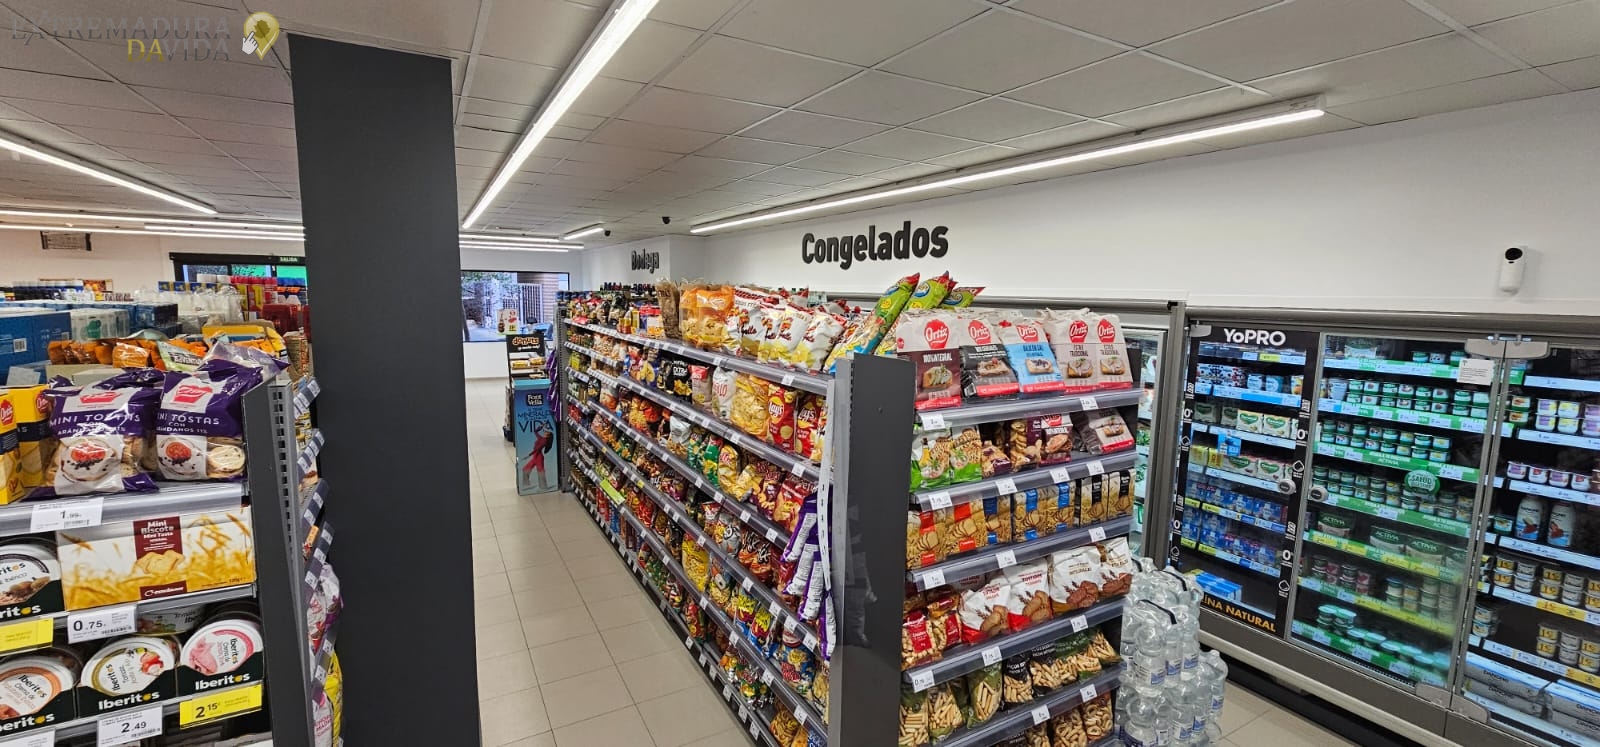 Supermercado en el Rodeo Coviran Caceres zona Antonio Hurrtado Avd.Cervantes Hospital Alcantara